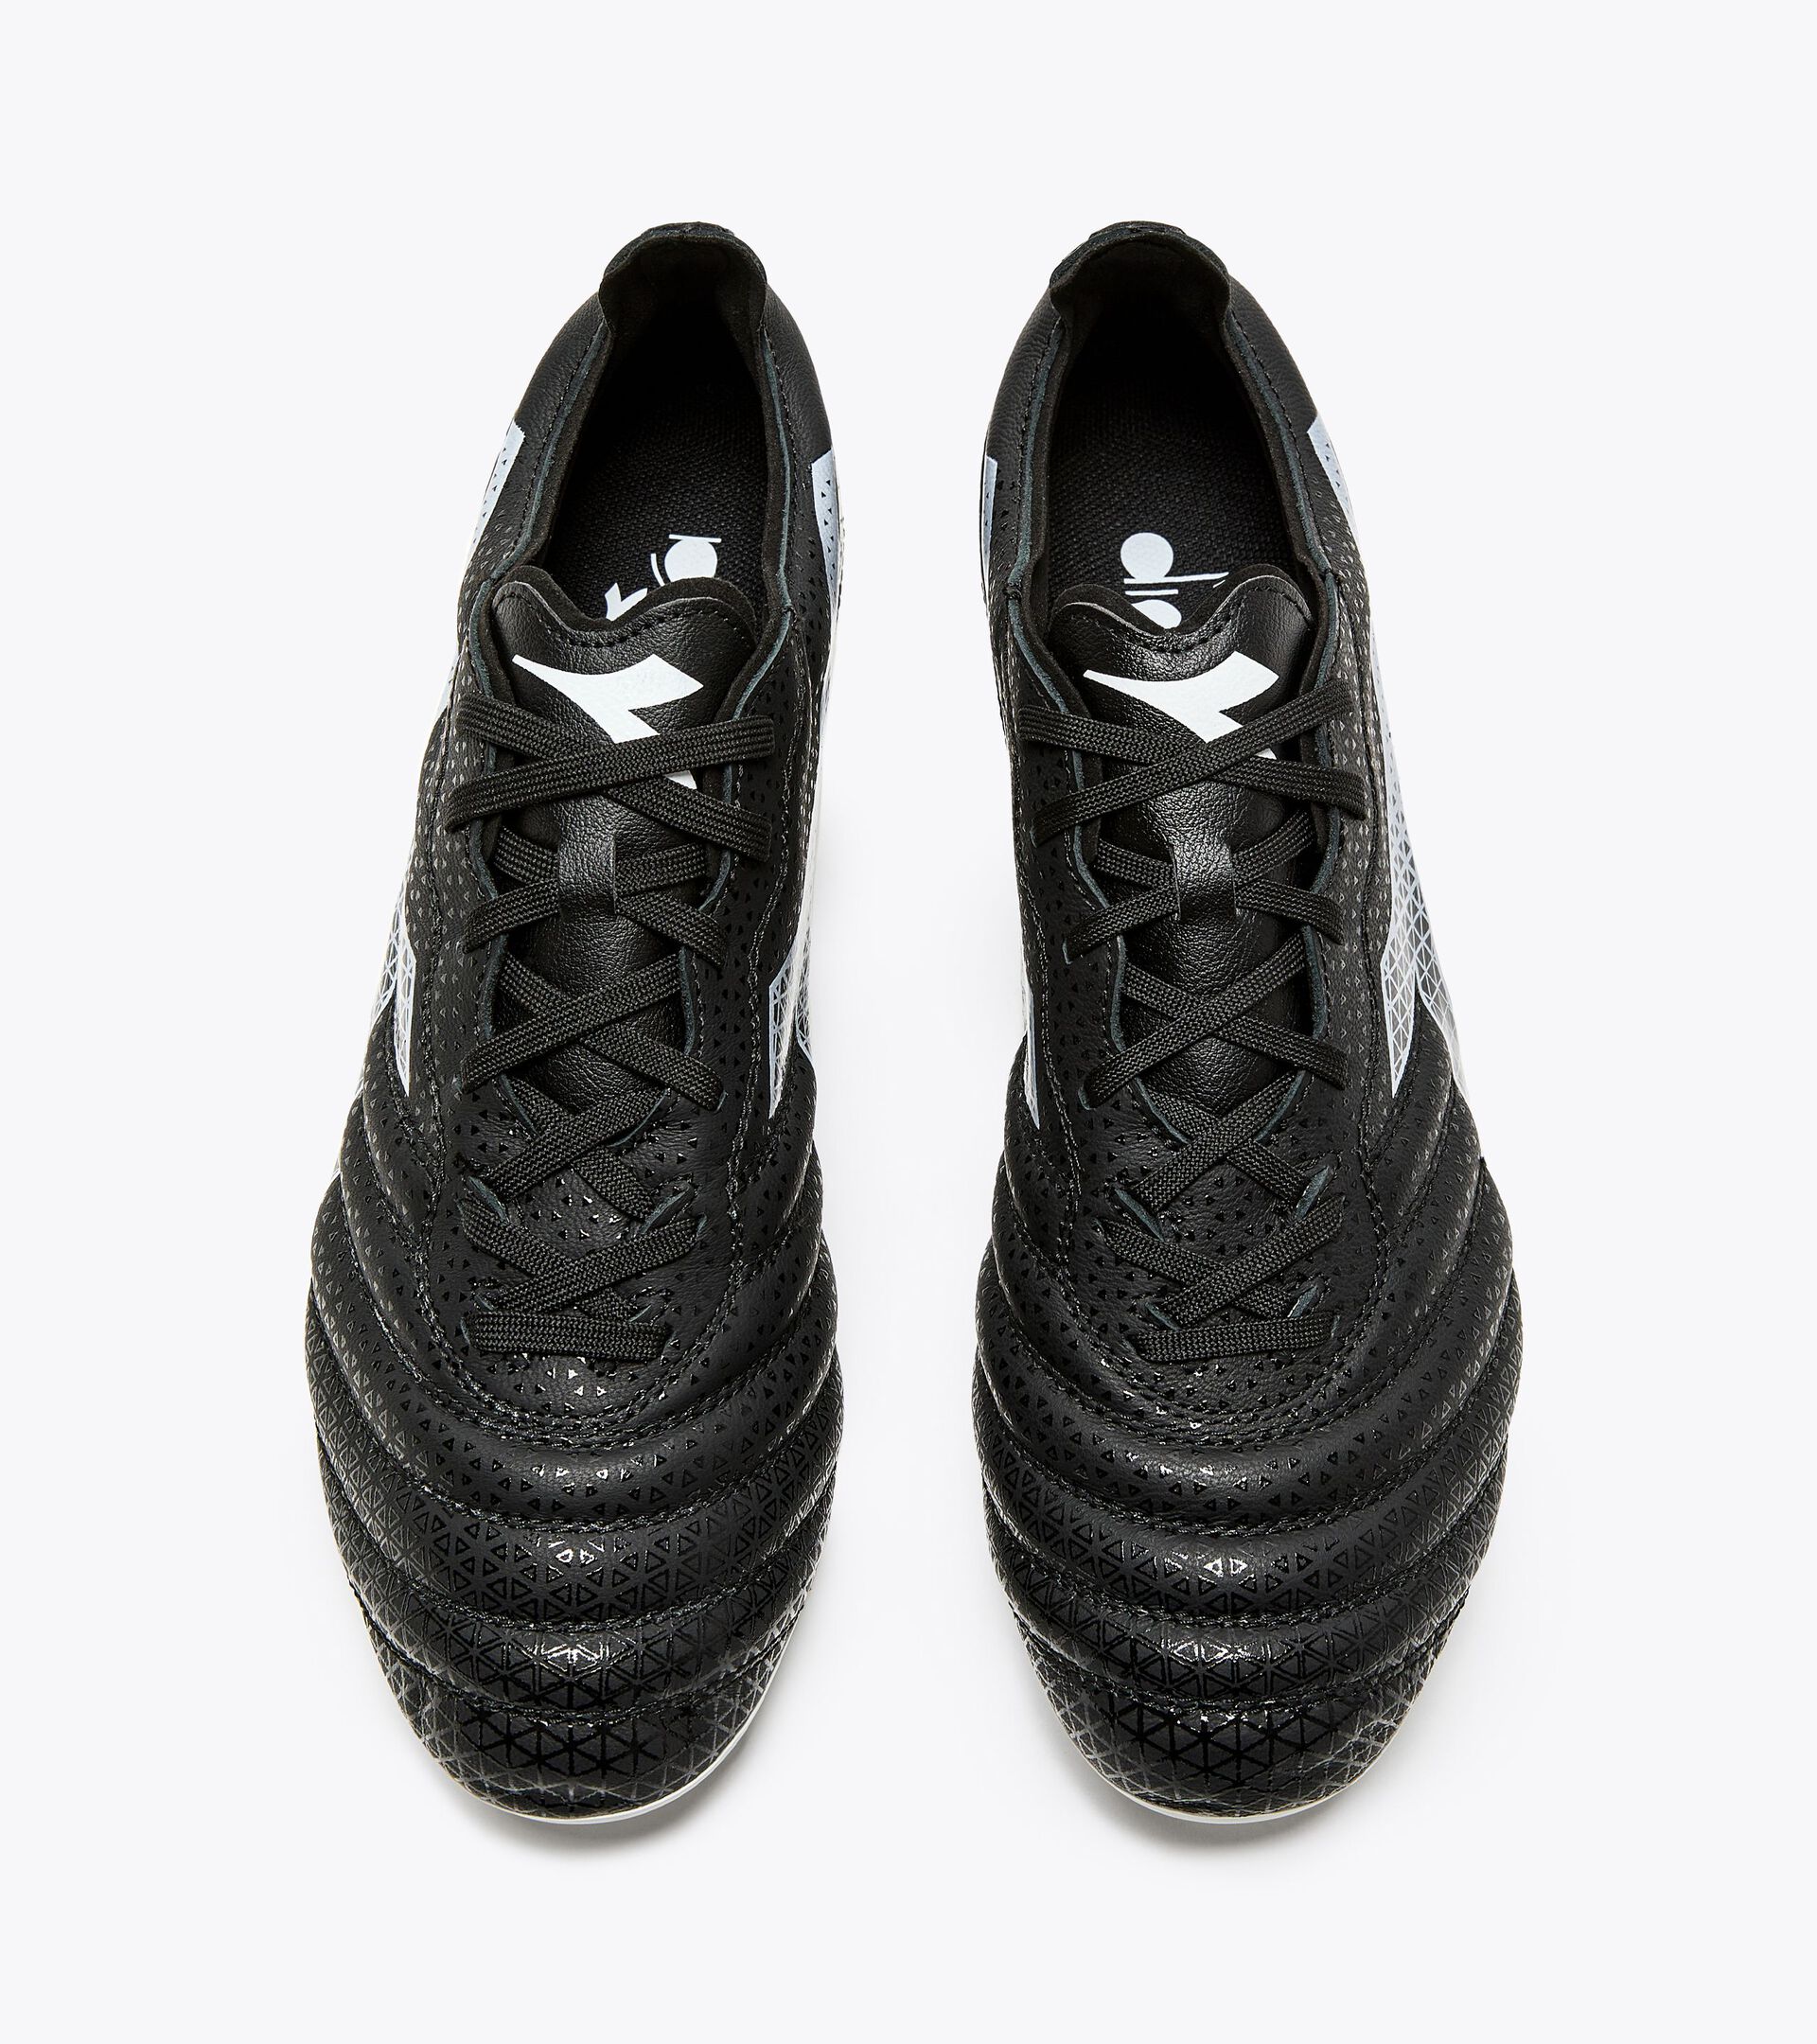 Calcio boots for firm grounds - Men BRASIL ELITE GR LT LP12 BLACK /WHITE - Diadora